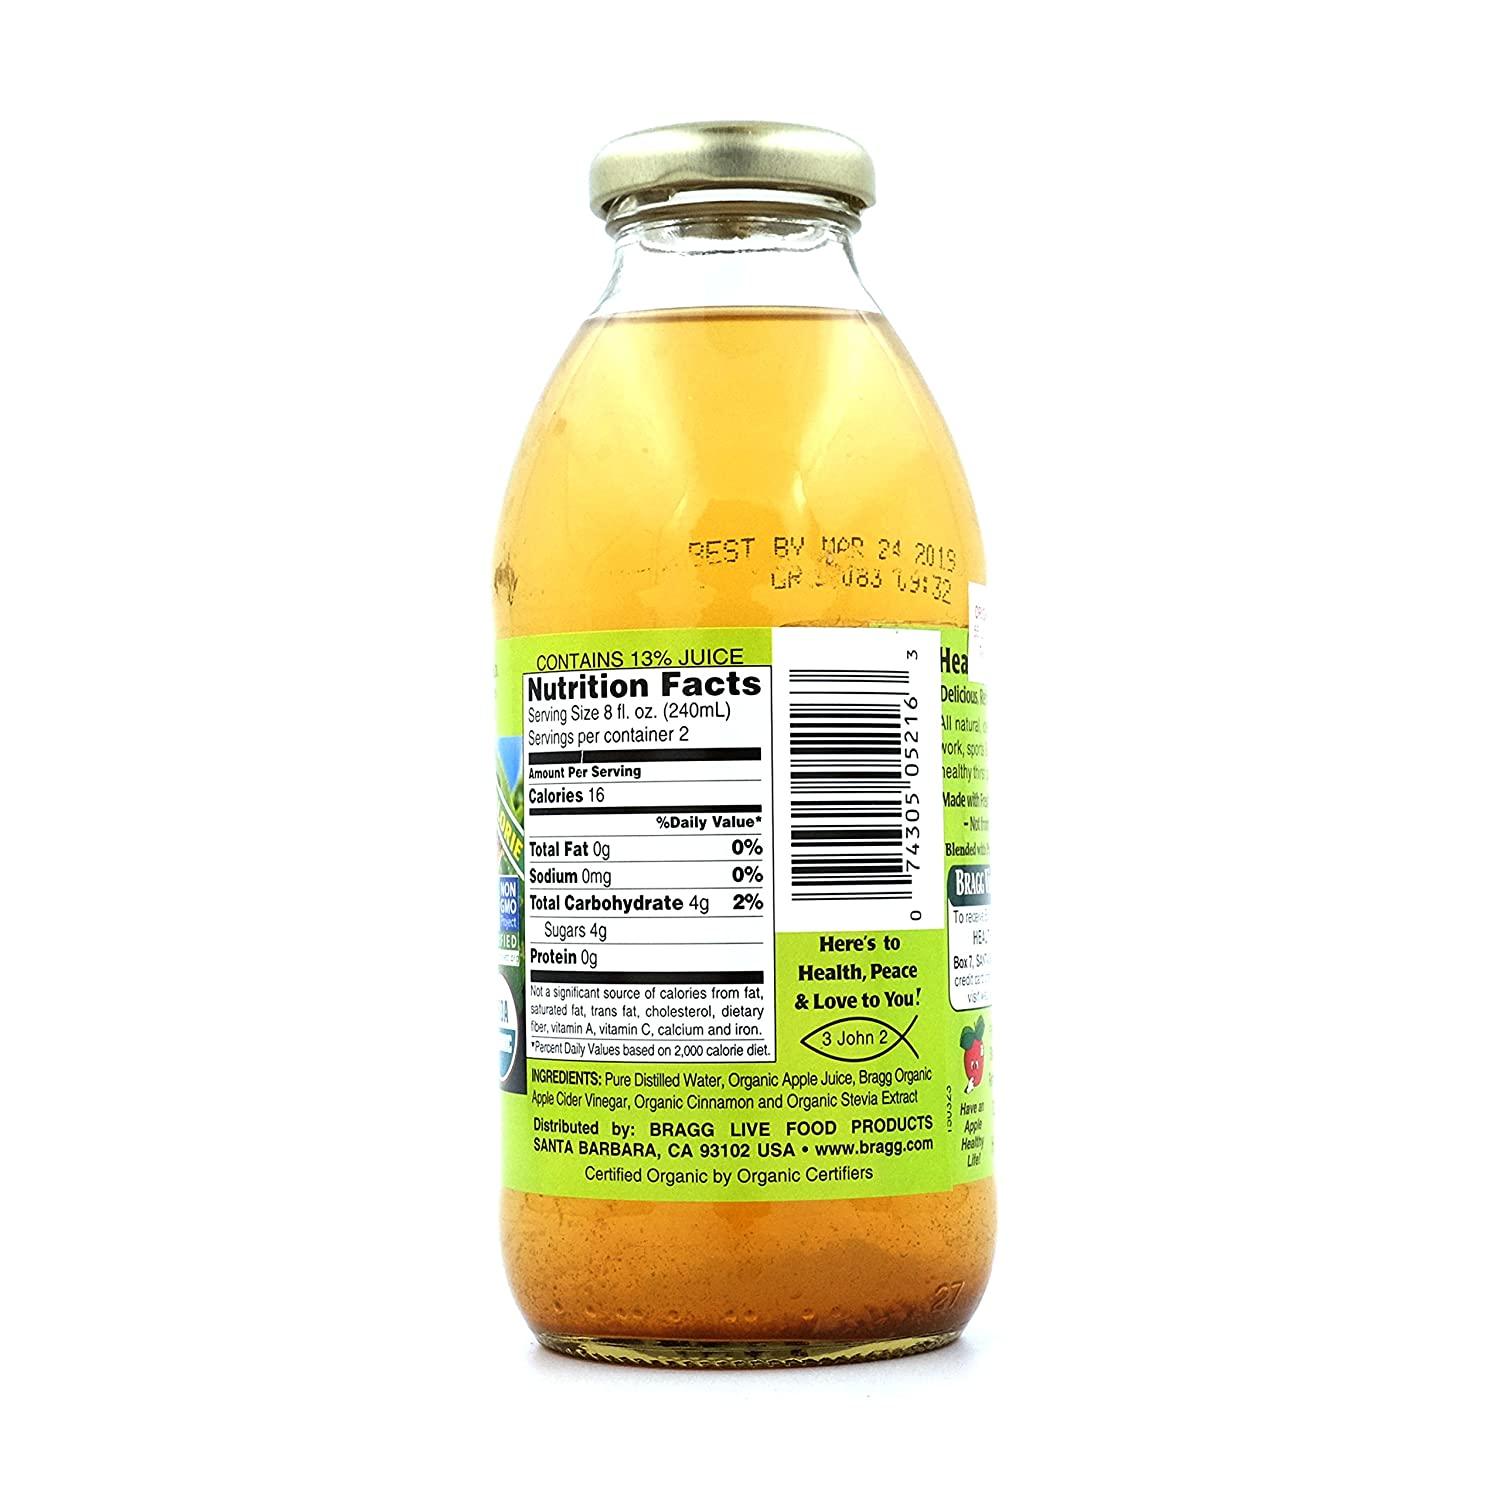 8 Best Apple Cider Vinegar Brands